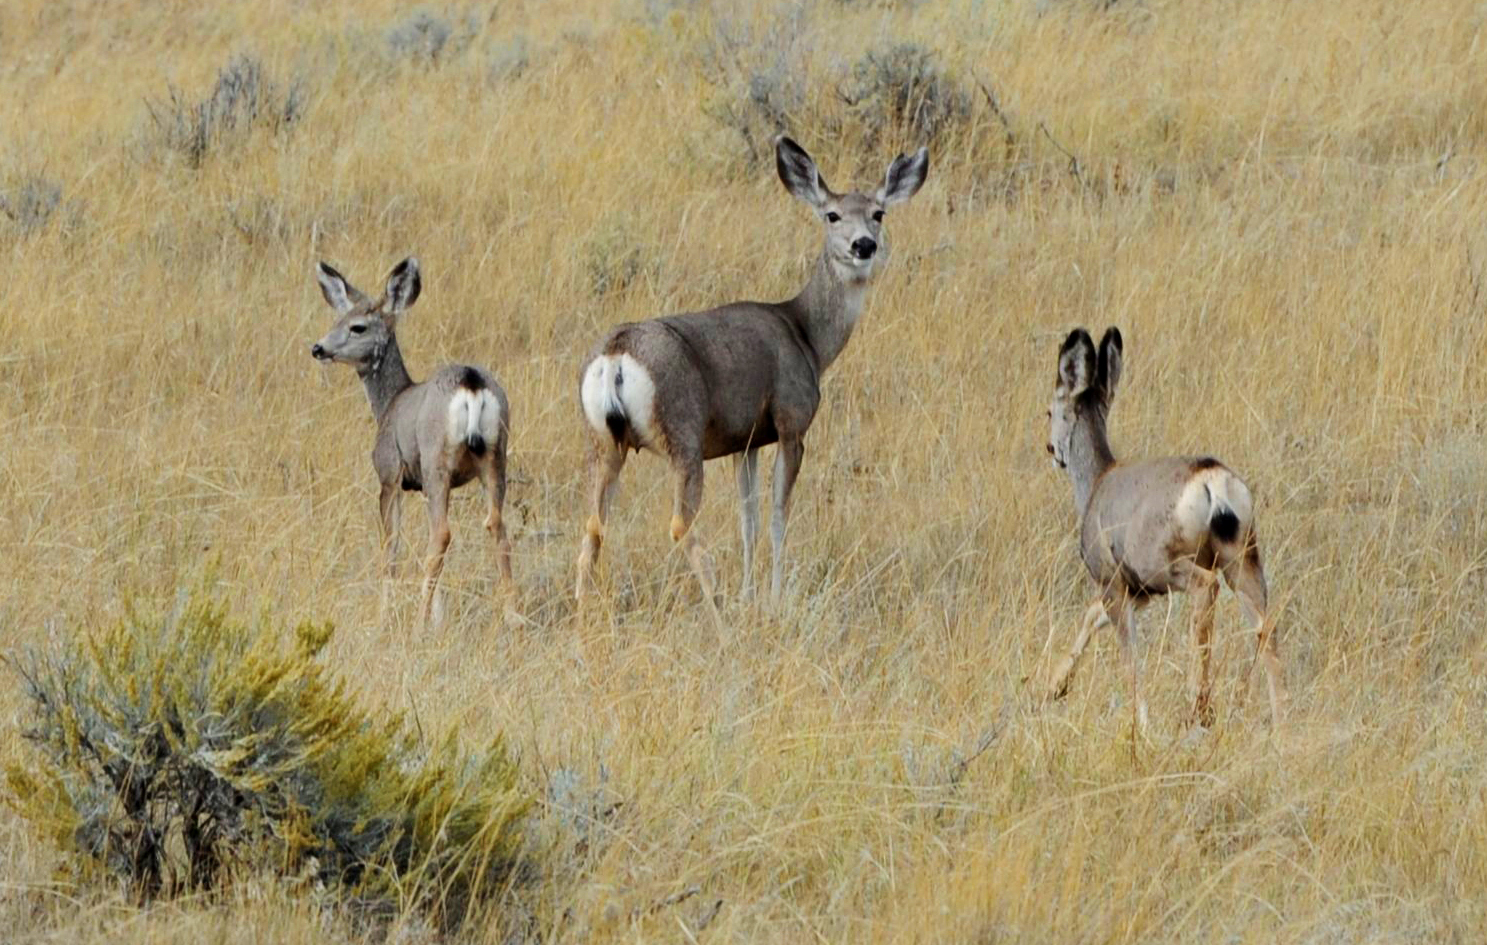 Brett French reports: Commission cuts mule deer doe hunting in Eastern ...